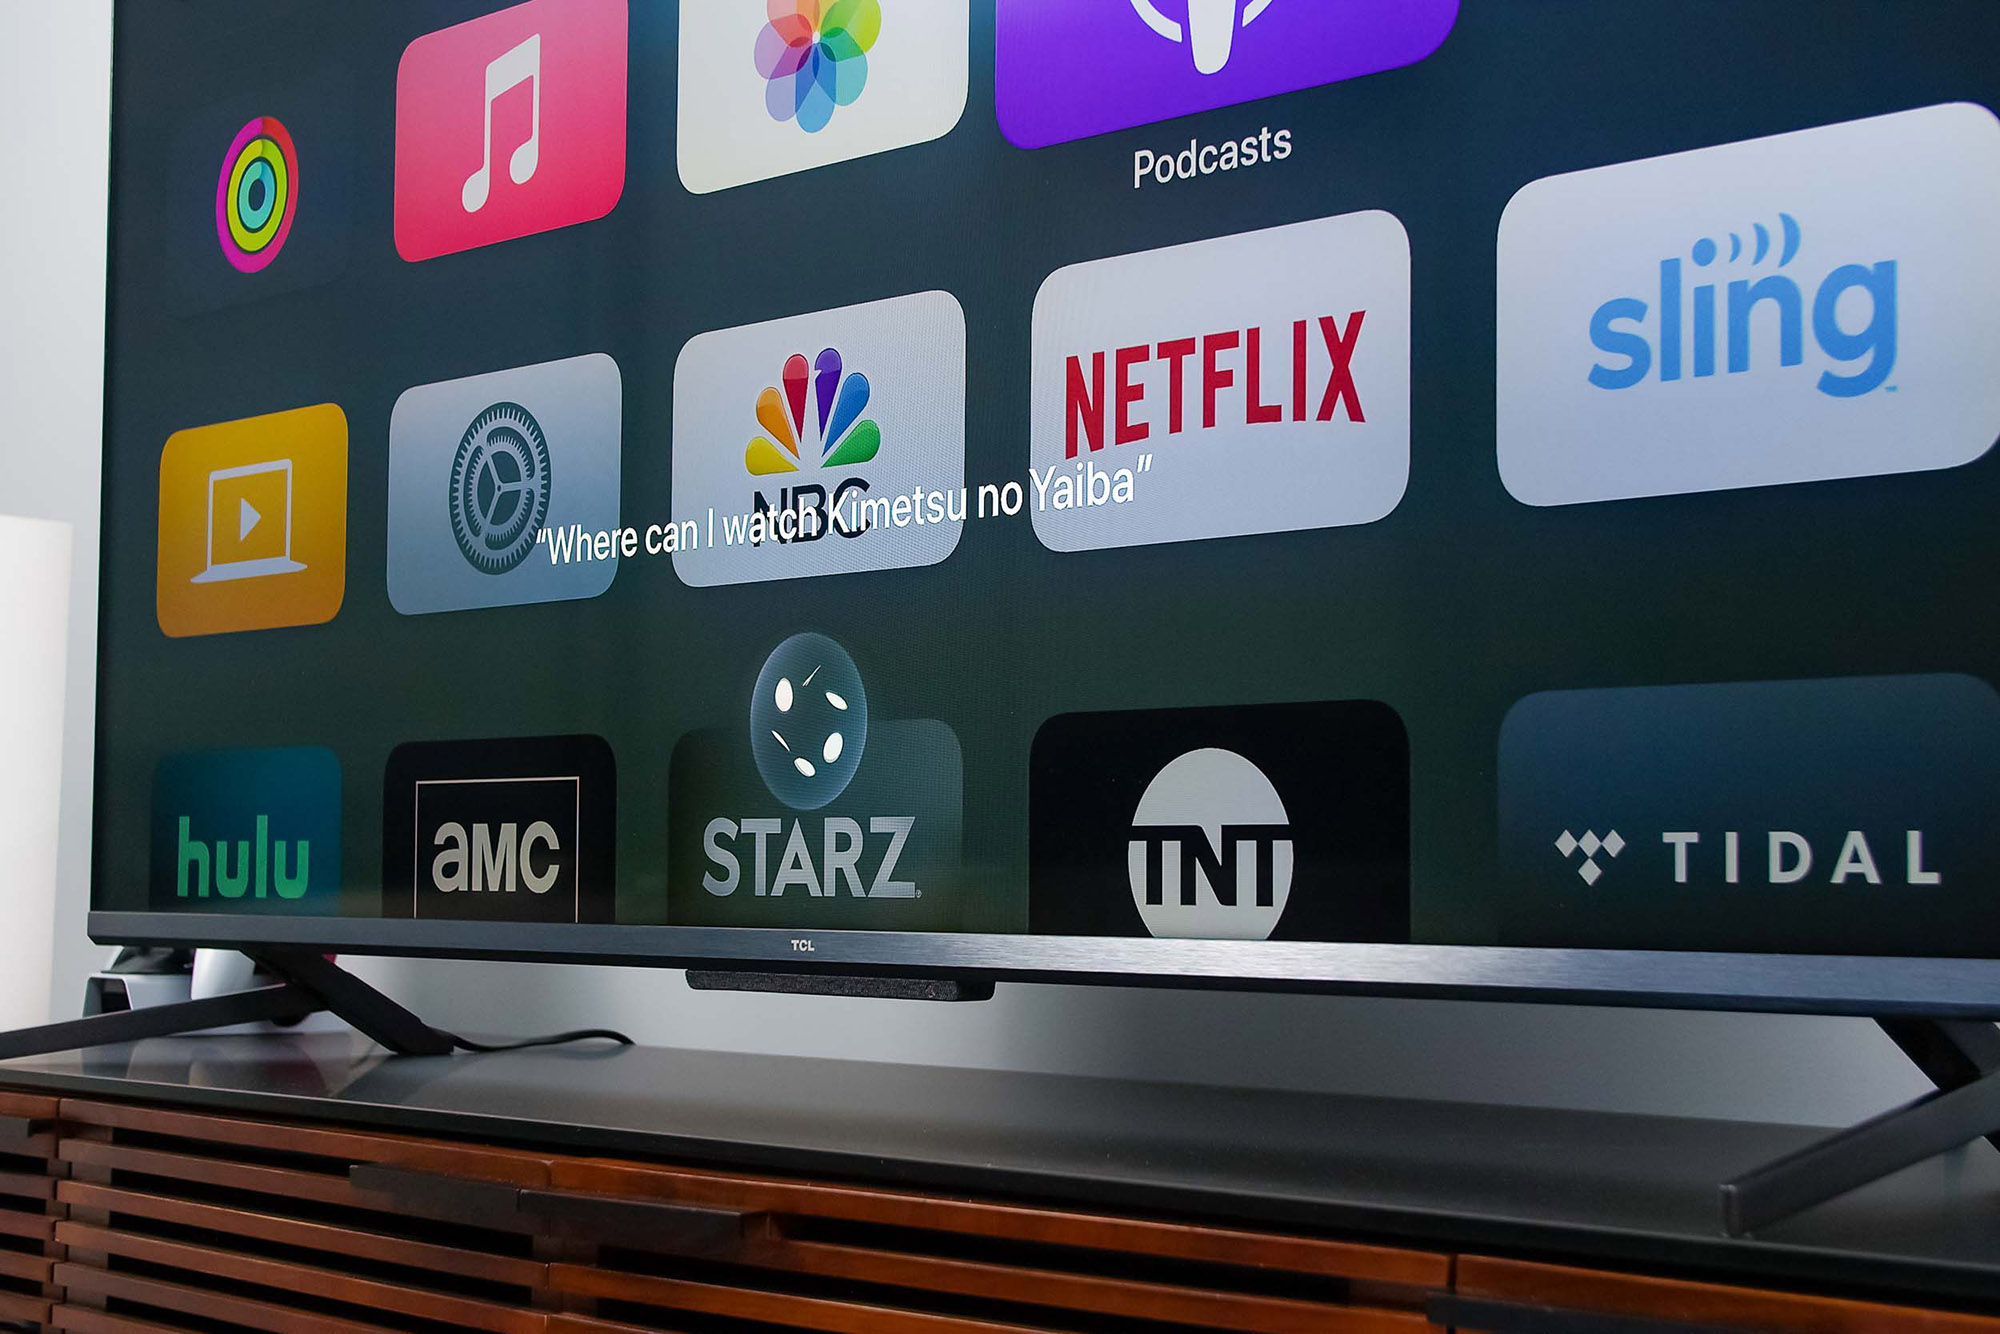 Apple exclui aplicativo pirata de TV disfarçado de jogo